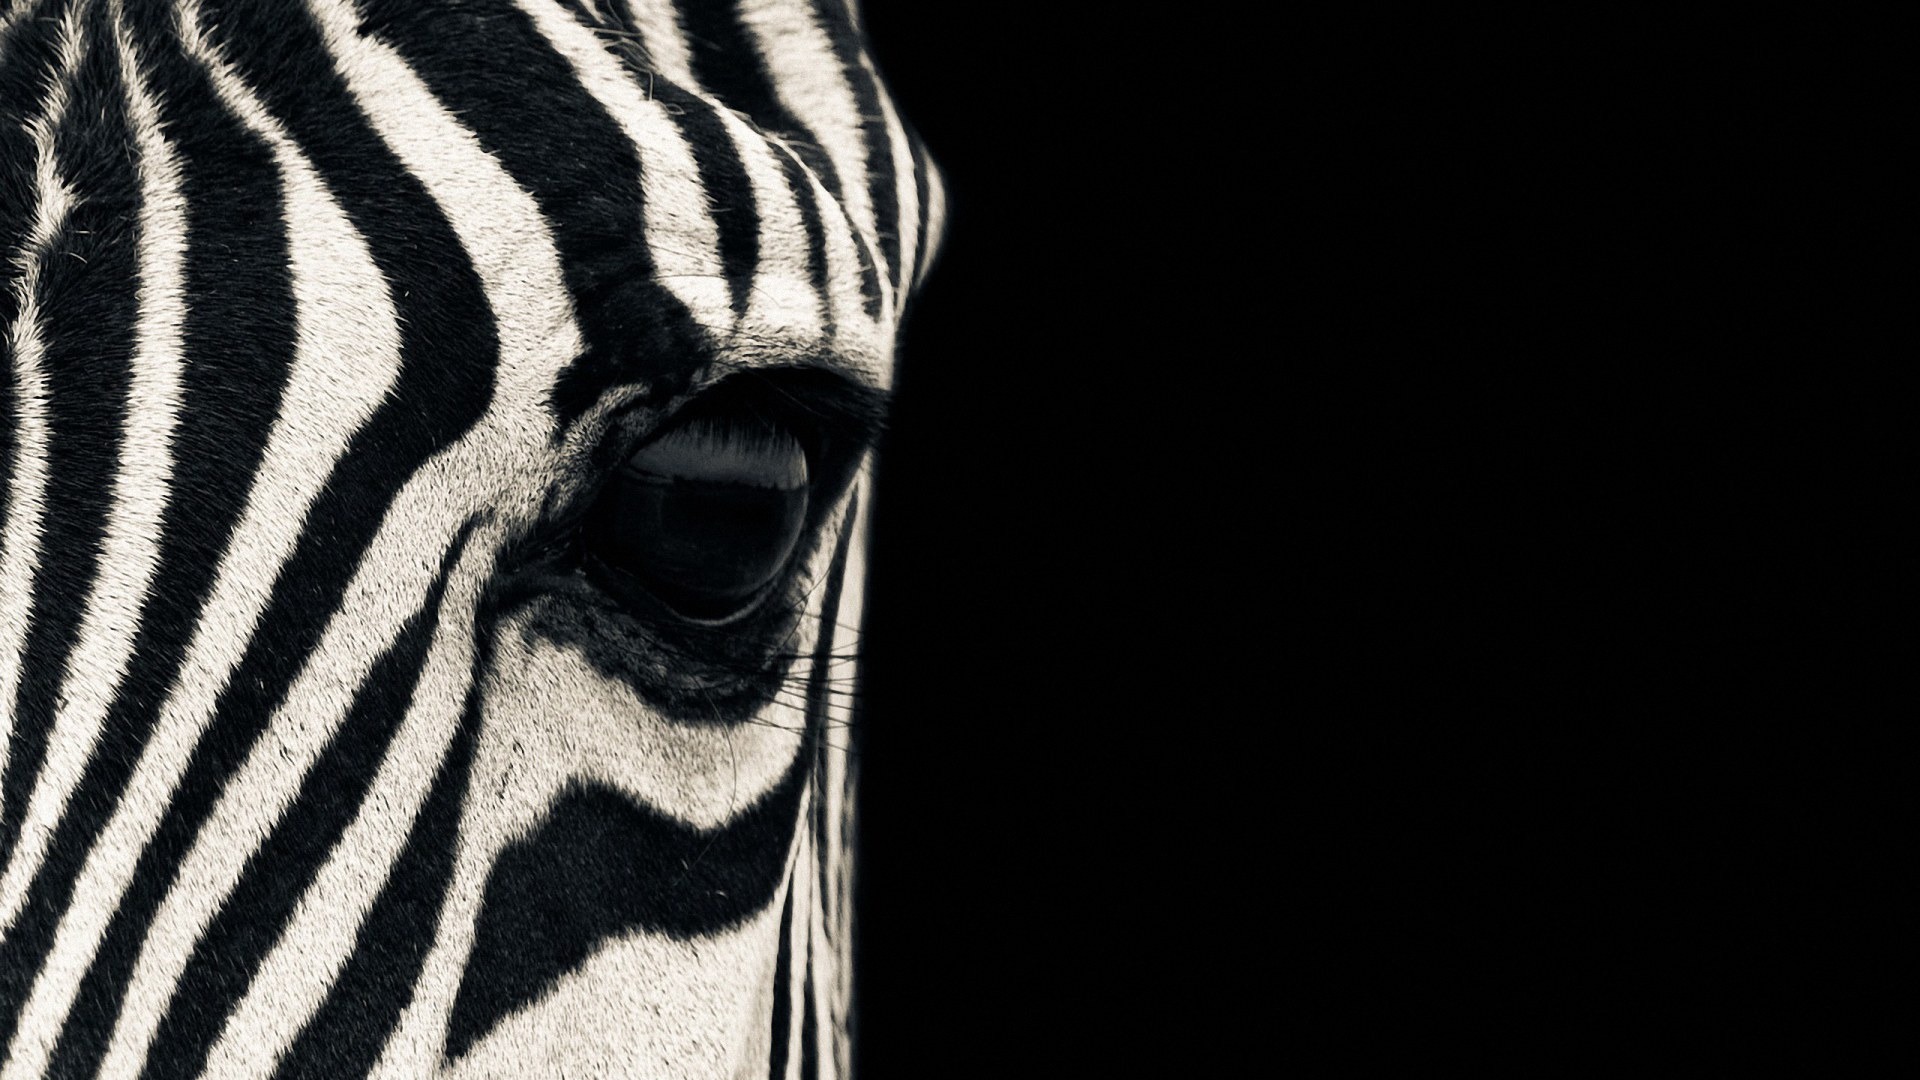 Zebra wallpapers | Zebra stock photos